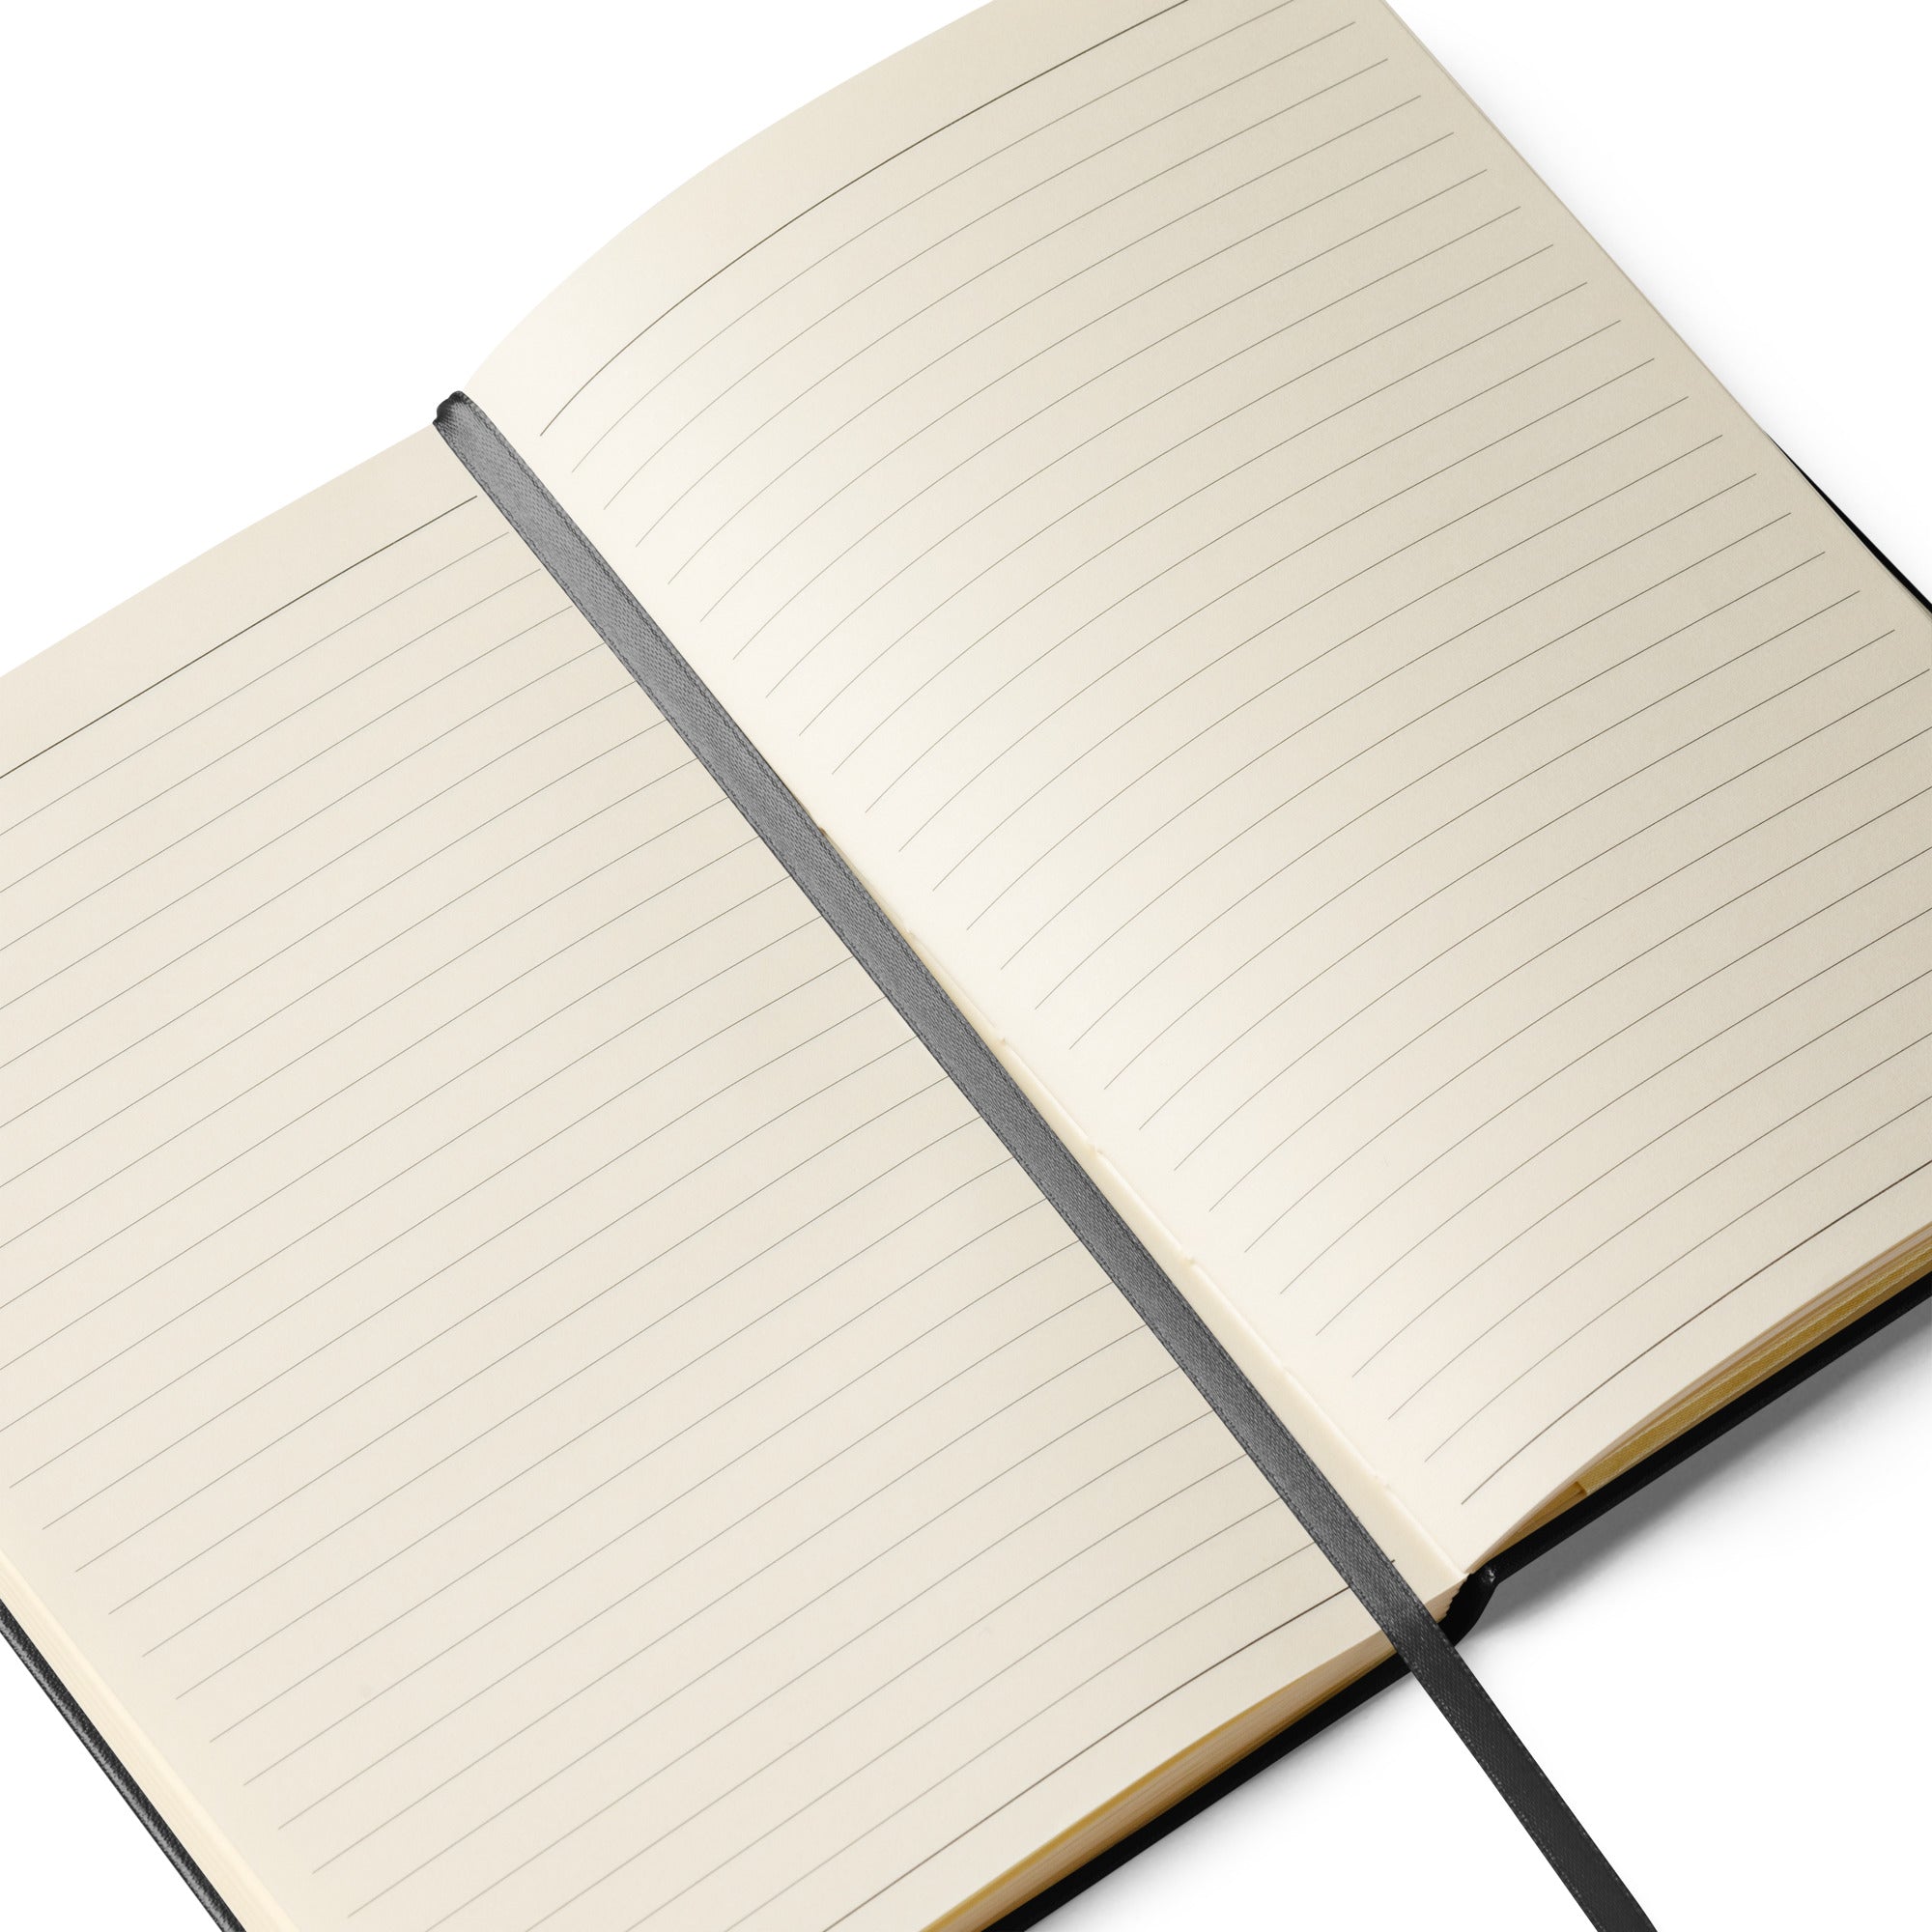 hardcover-bound-notebook-black-product-details-2-64cc04ebdf0ac.jpg